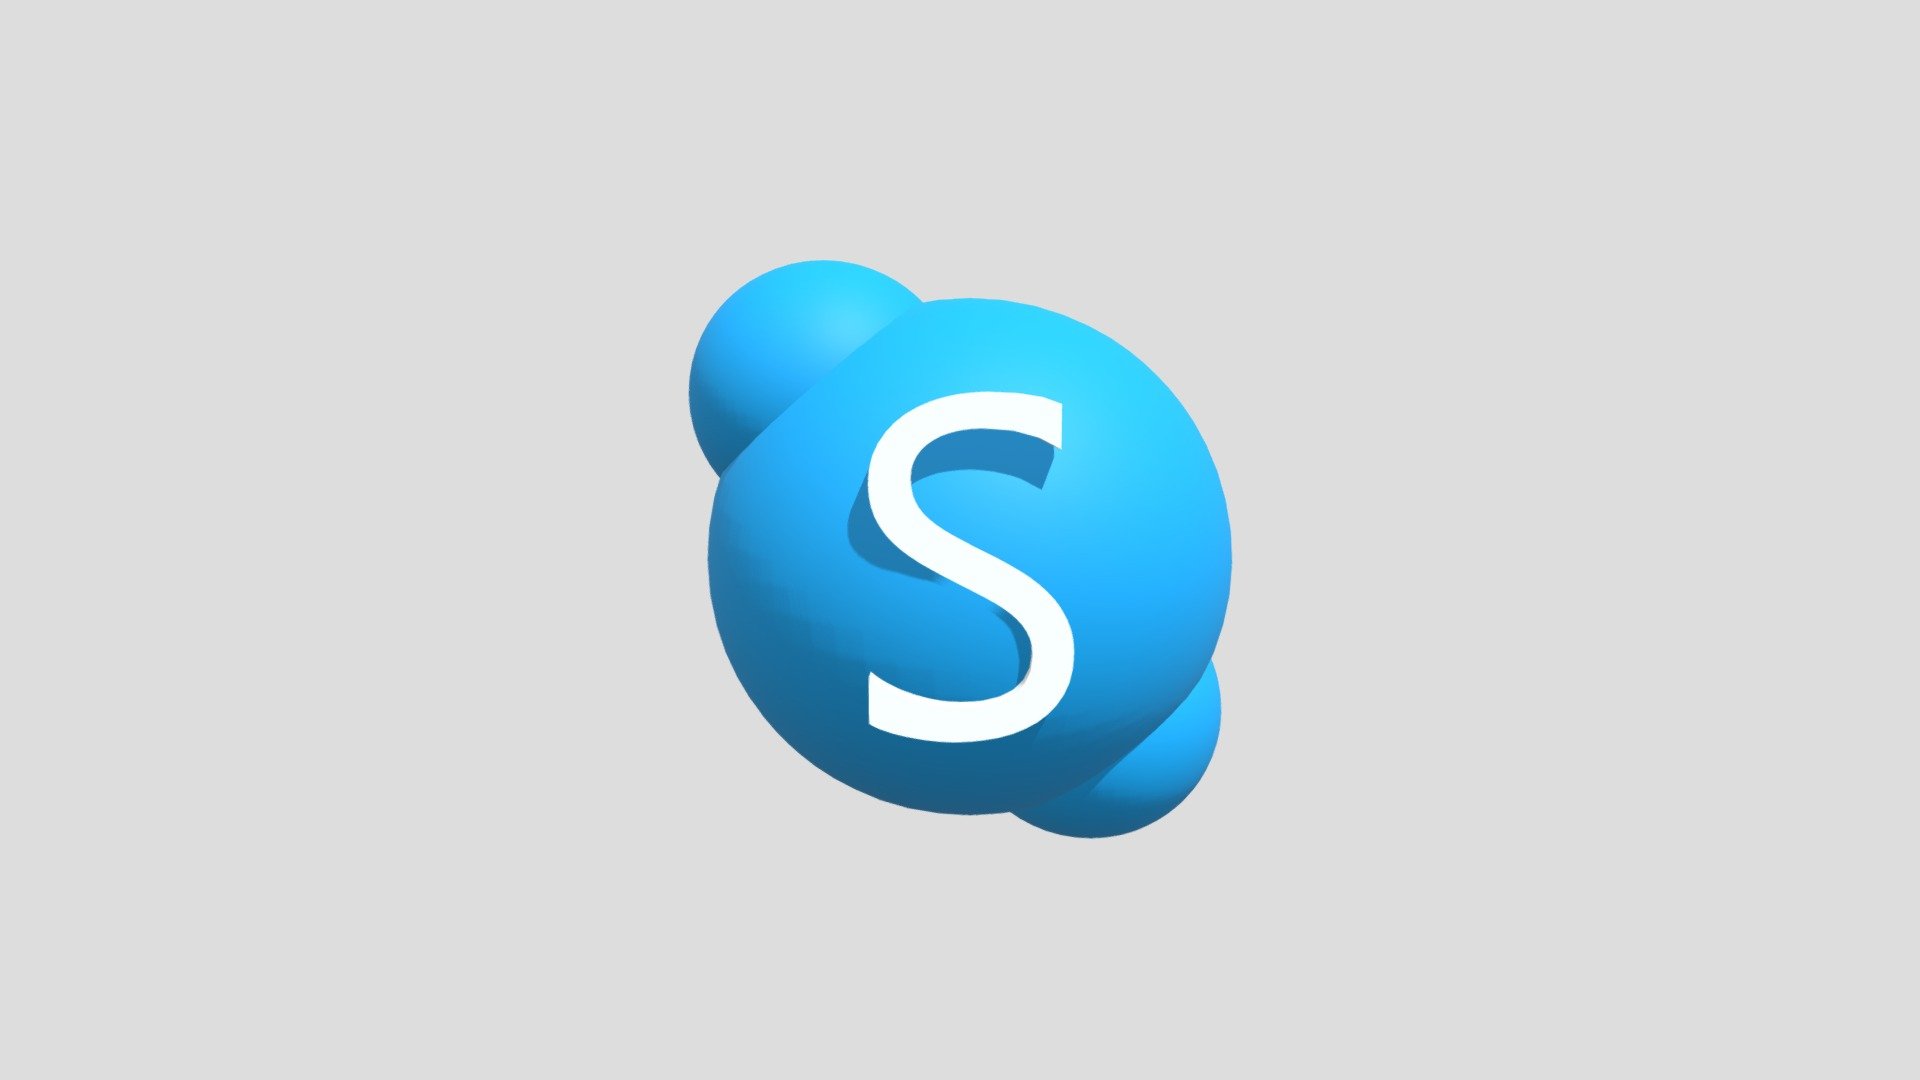 abstract skype logo